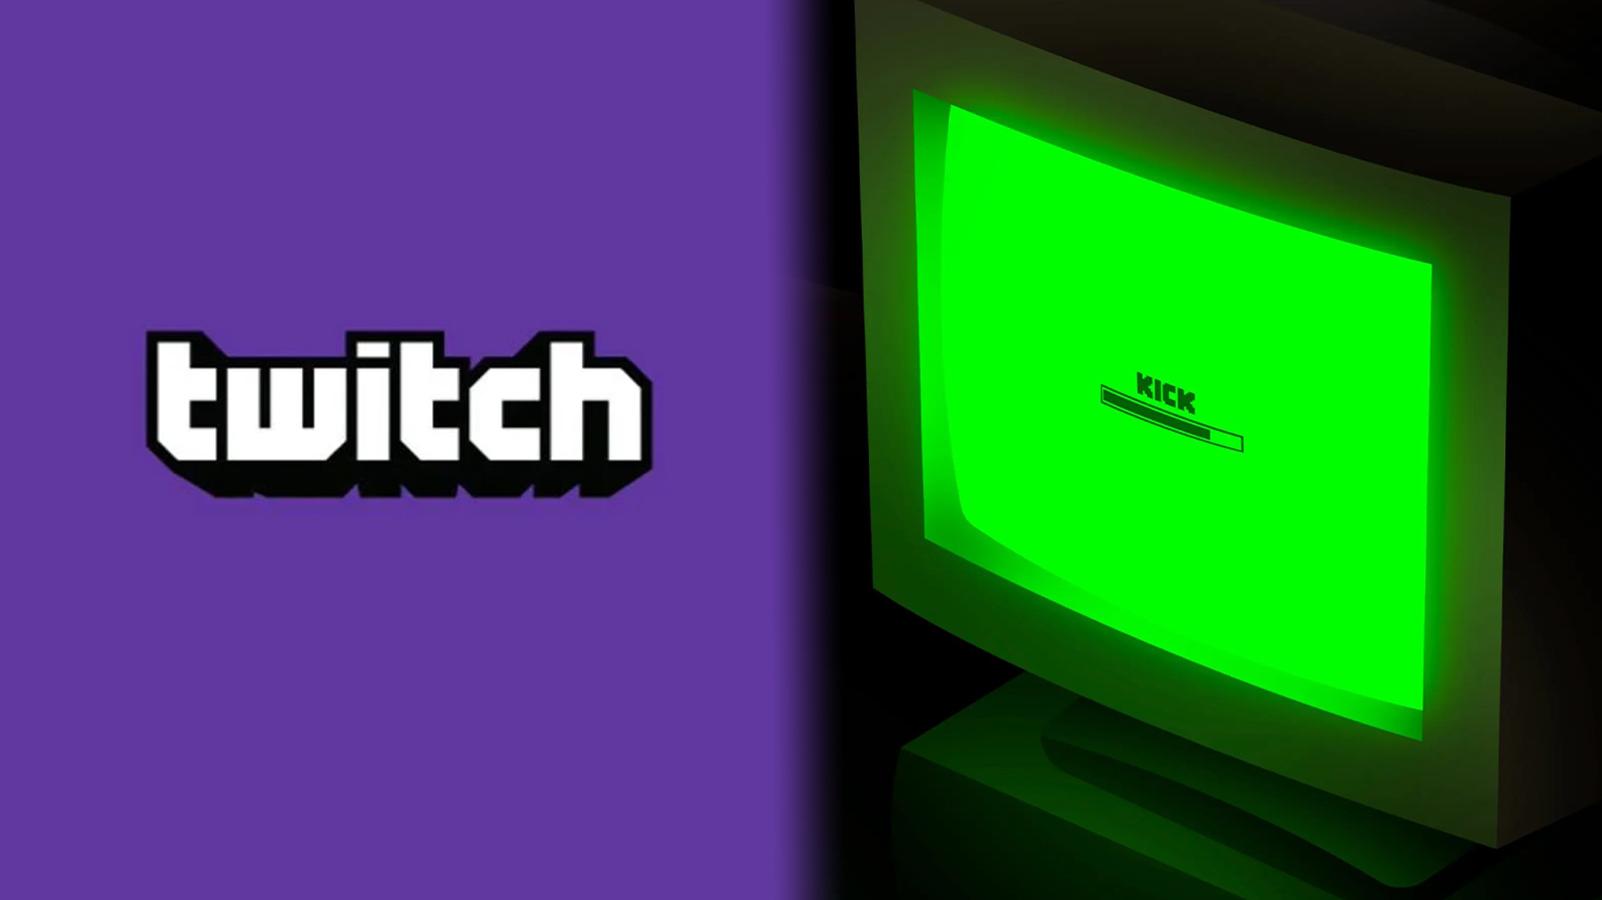 Twitch and Kick logos